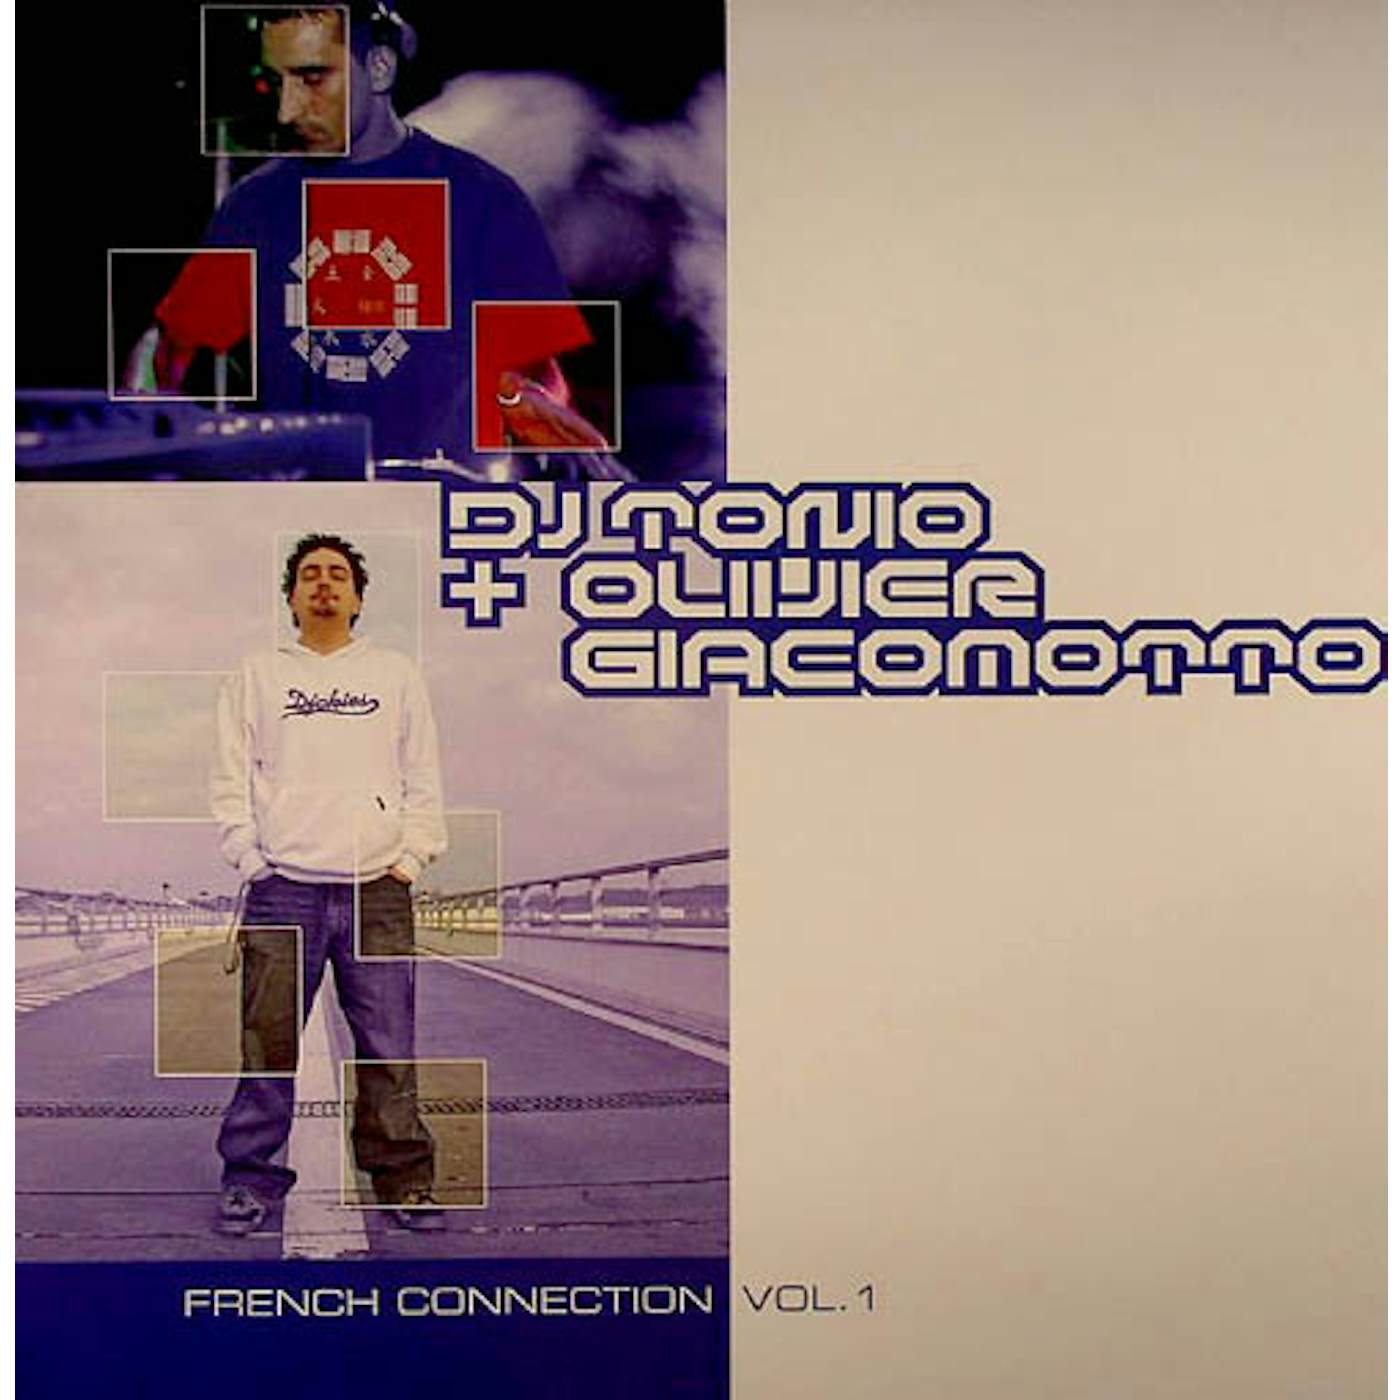 Dj Tonio/Olivier Giacomotto FRENCH CONNECTION 1 Vinyl Record